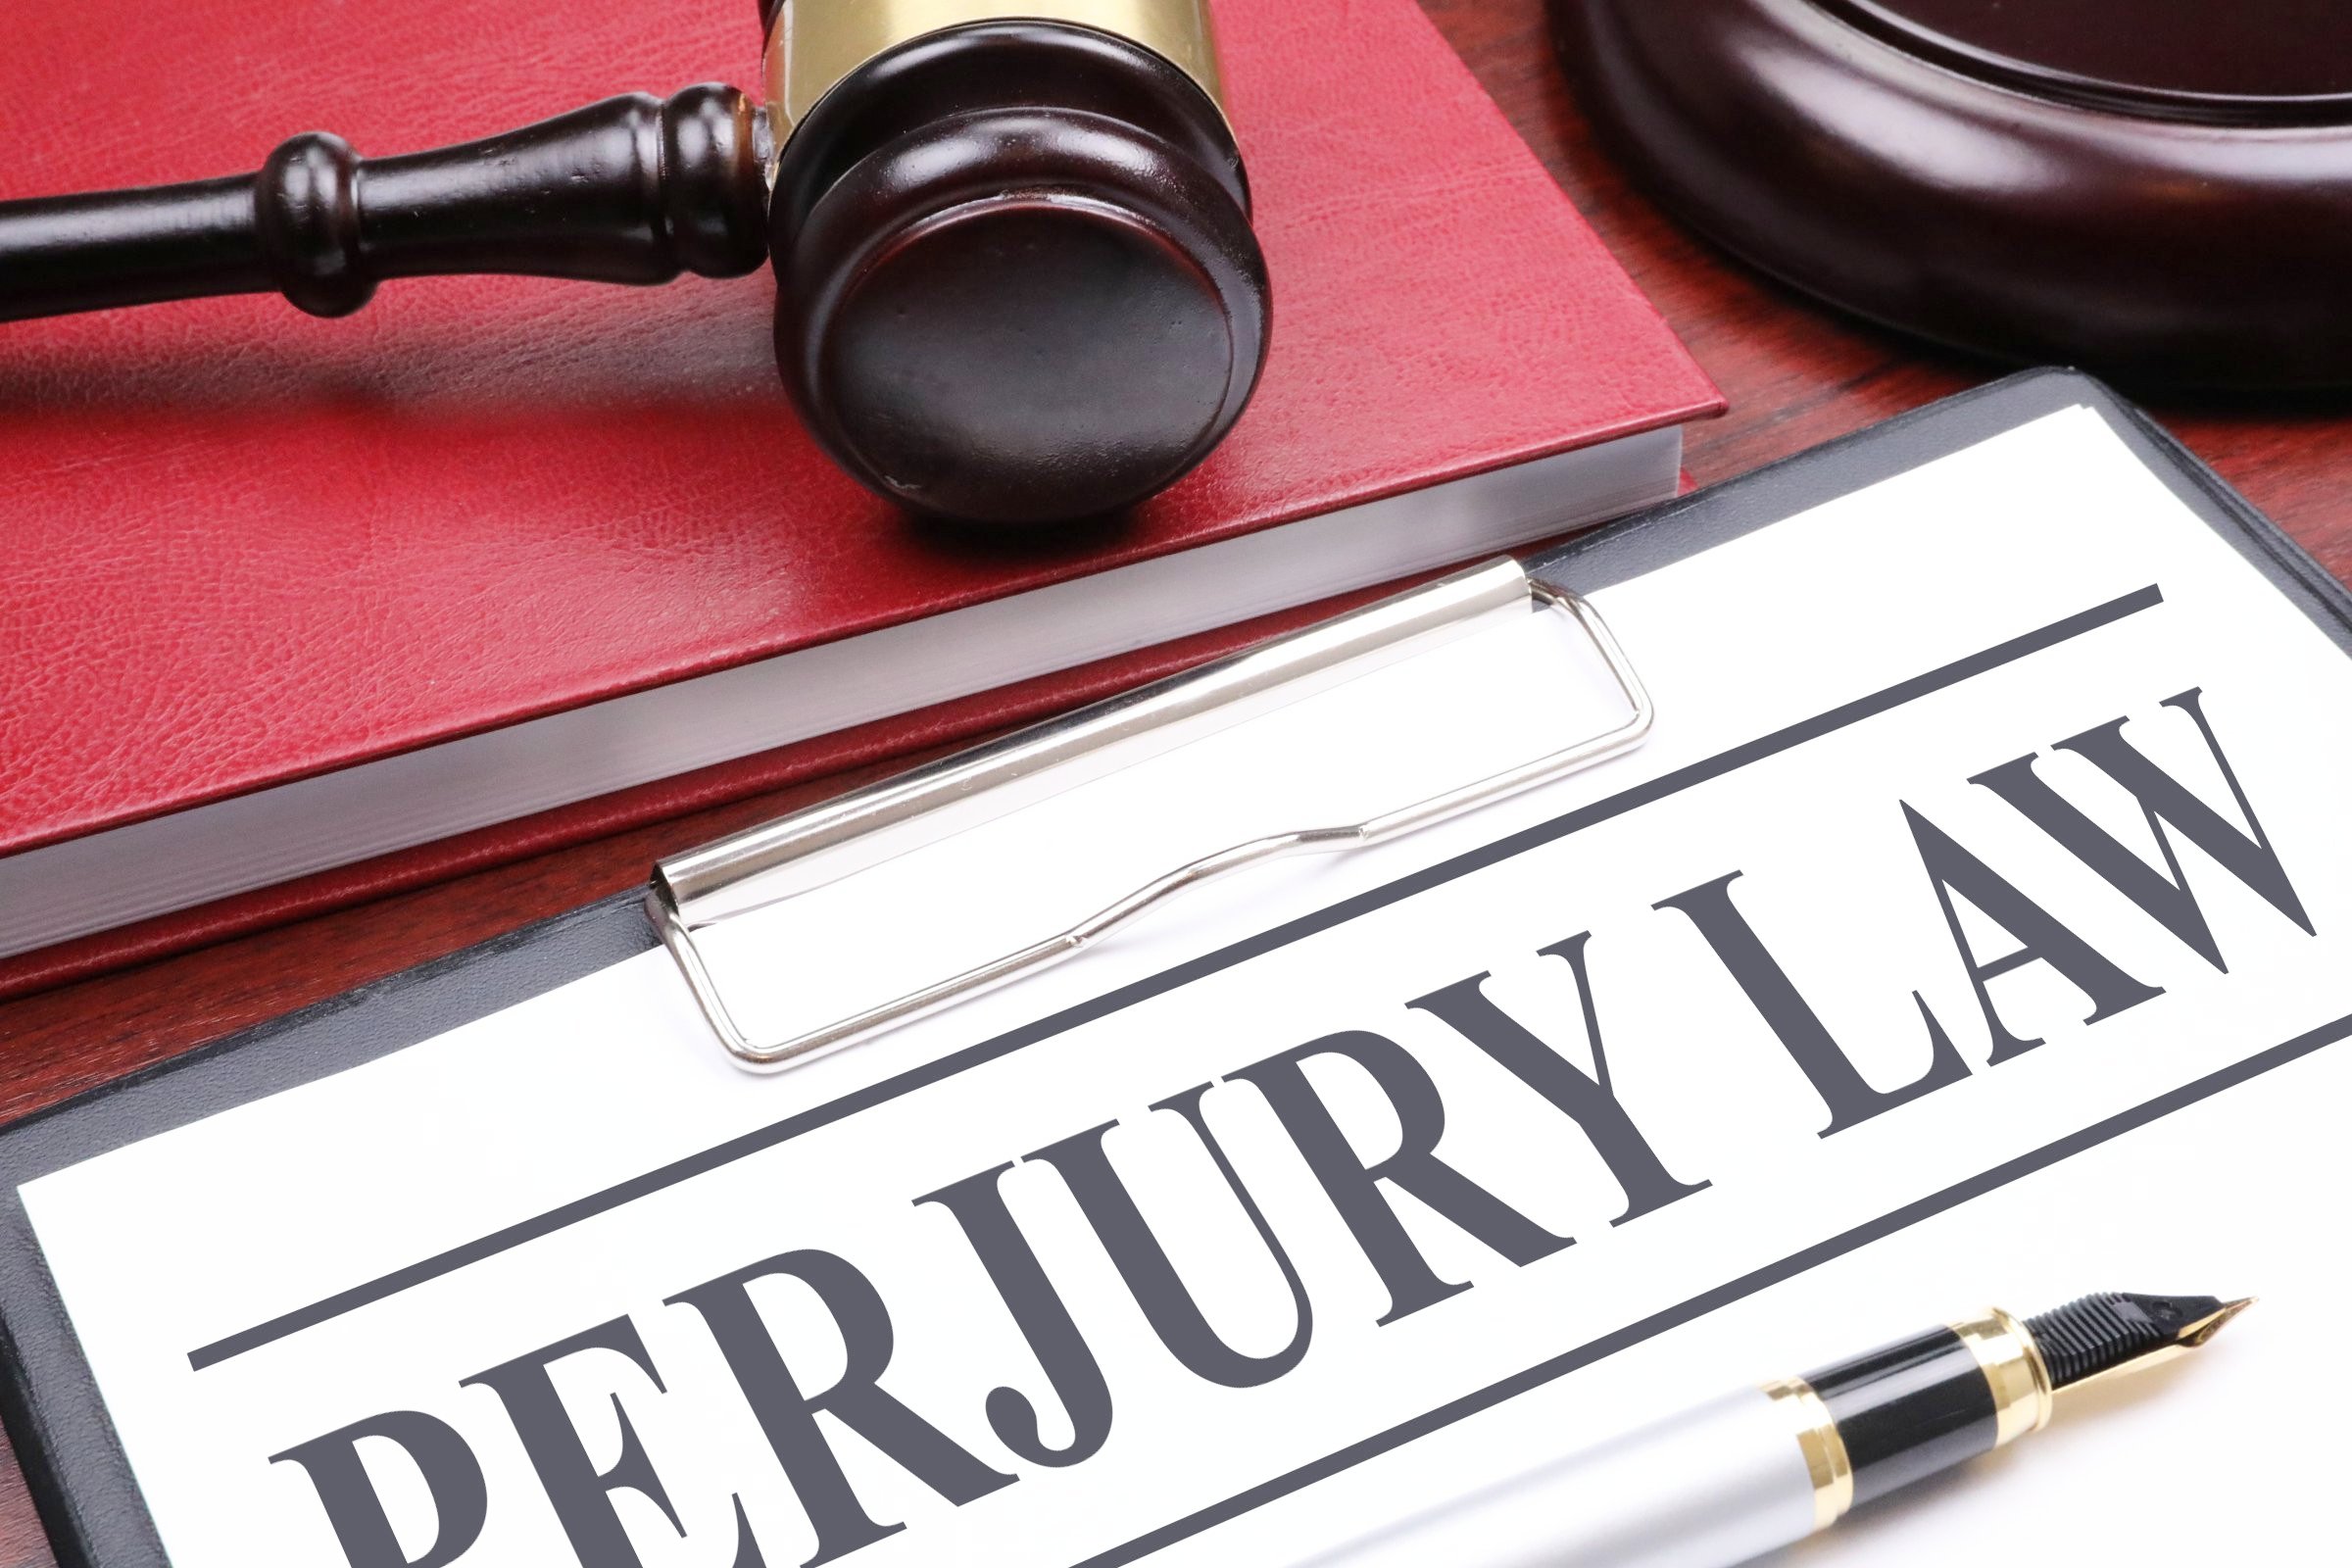 perjury law